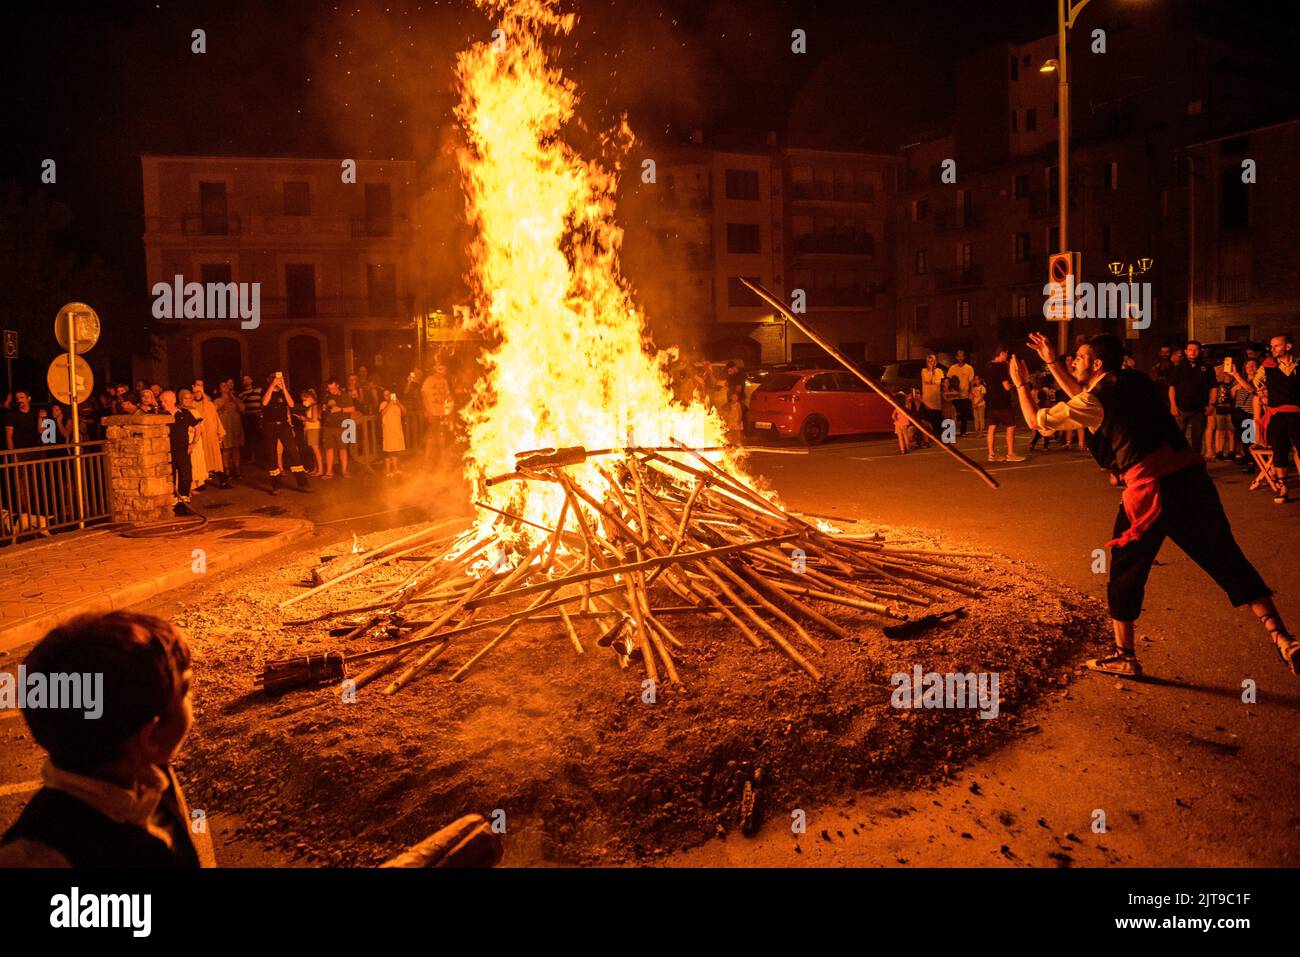 Bonfire in the torchlight descent of La Pobla de Segur, an UNESCO intangible heritage in the Pyrenees (Pallars Jussà, Lleida, Catalonia, Spain) Stock Photo